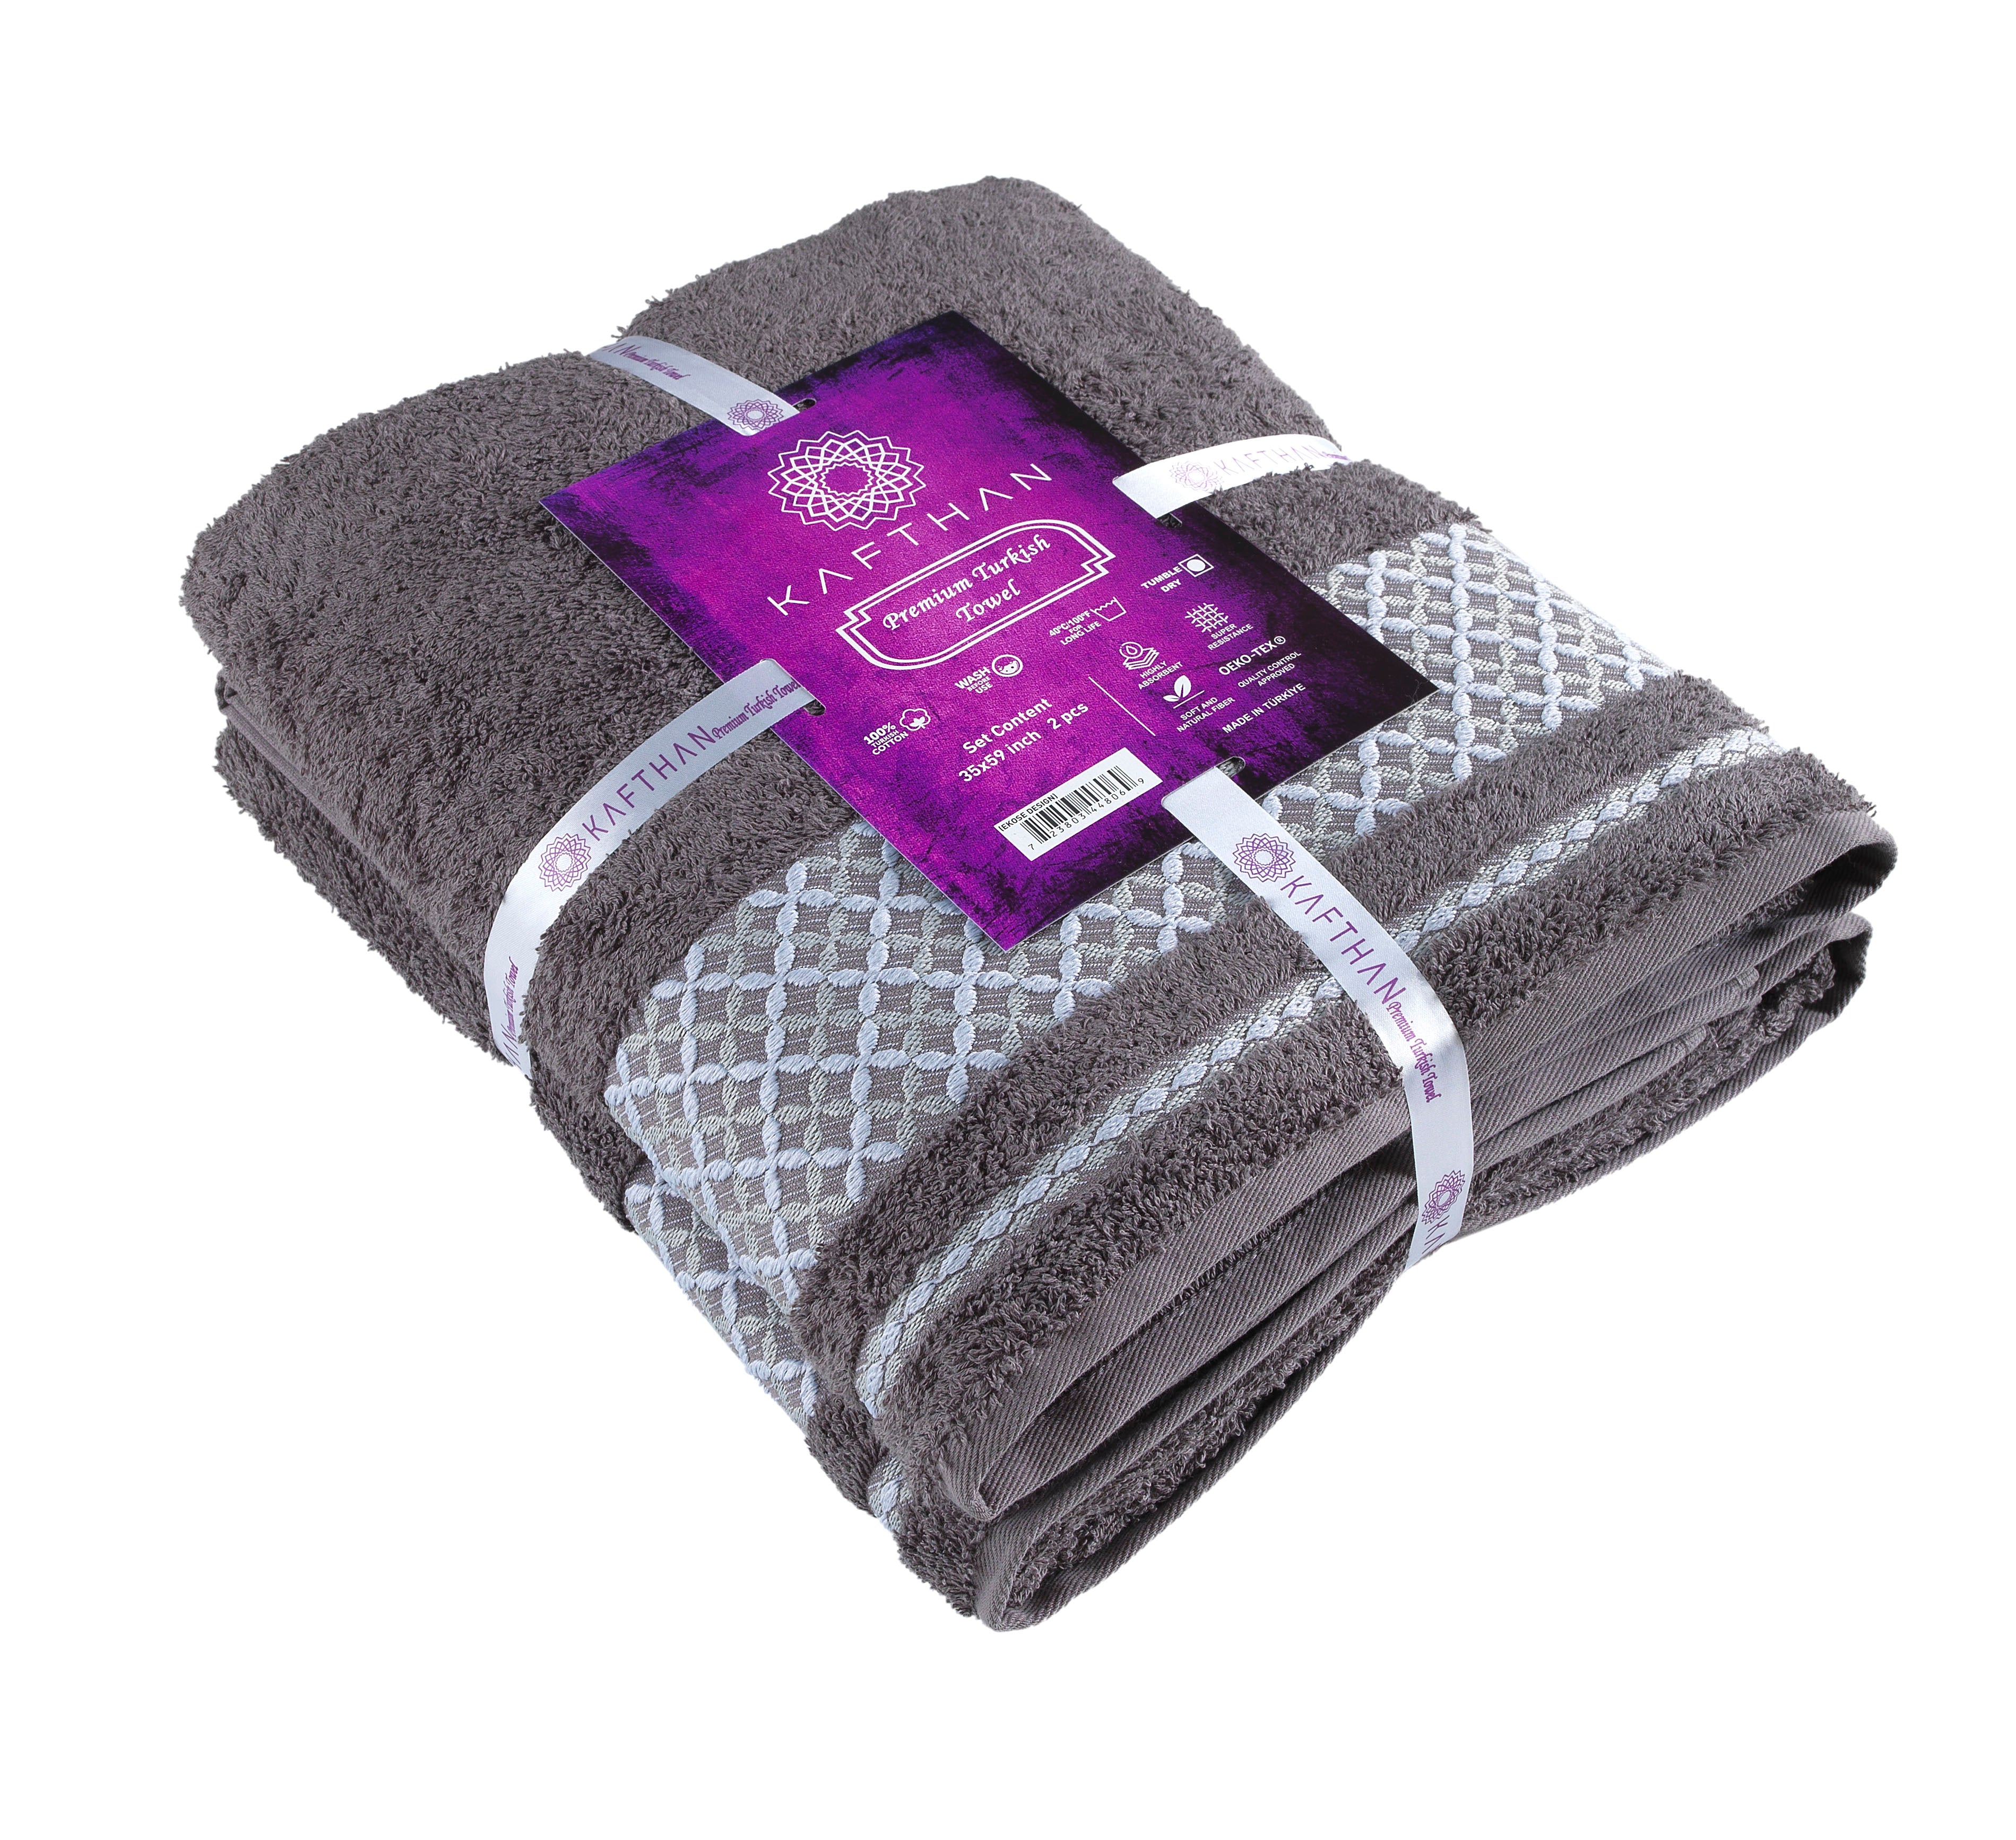 Plaid Bath Towel, Cotton Turkish Towels - Set of 2